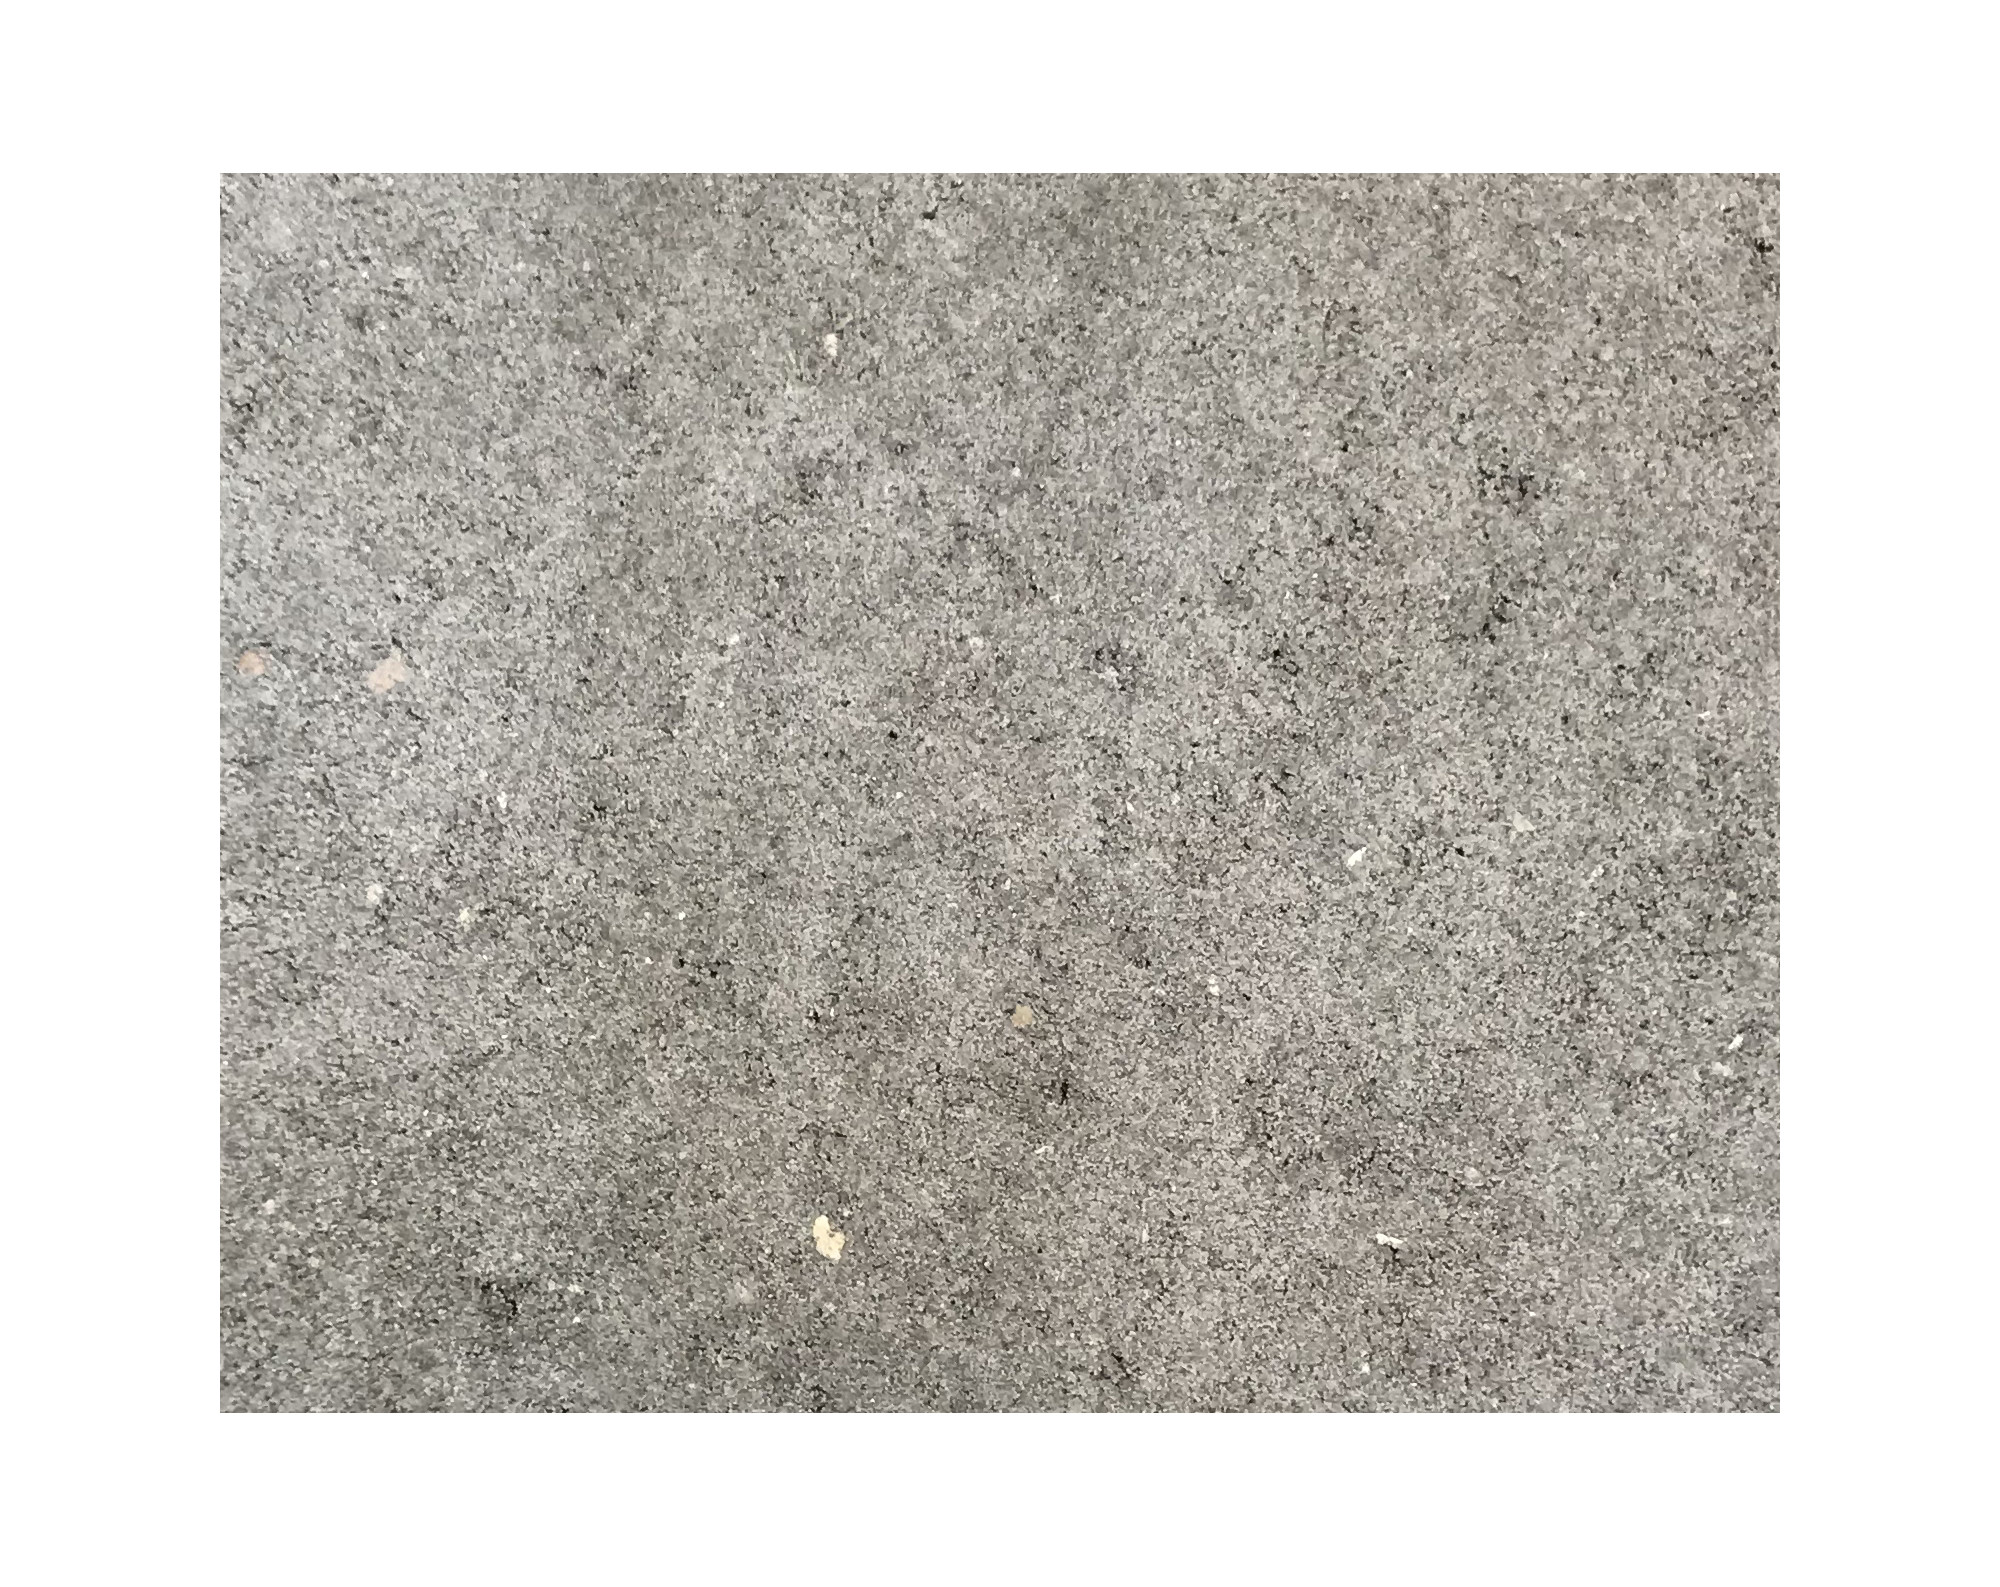 Harmo roc nevadaset, rustica-serie, ovaal d: 6,00mx11,30m, grijs, beton